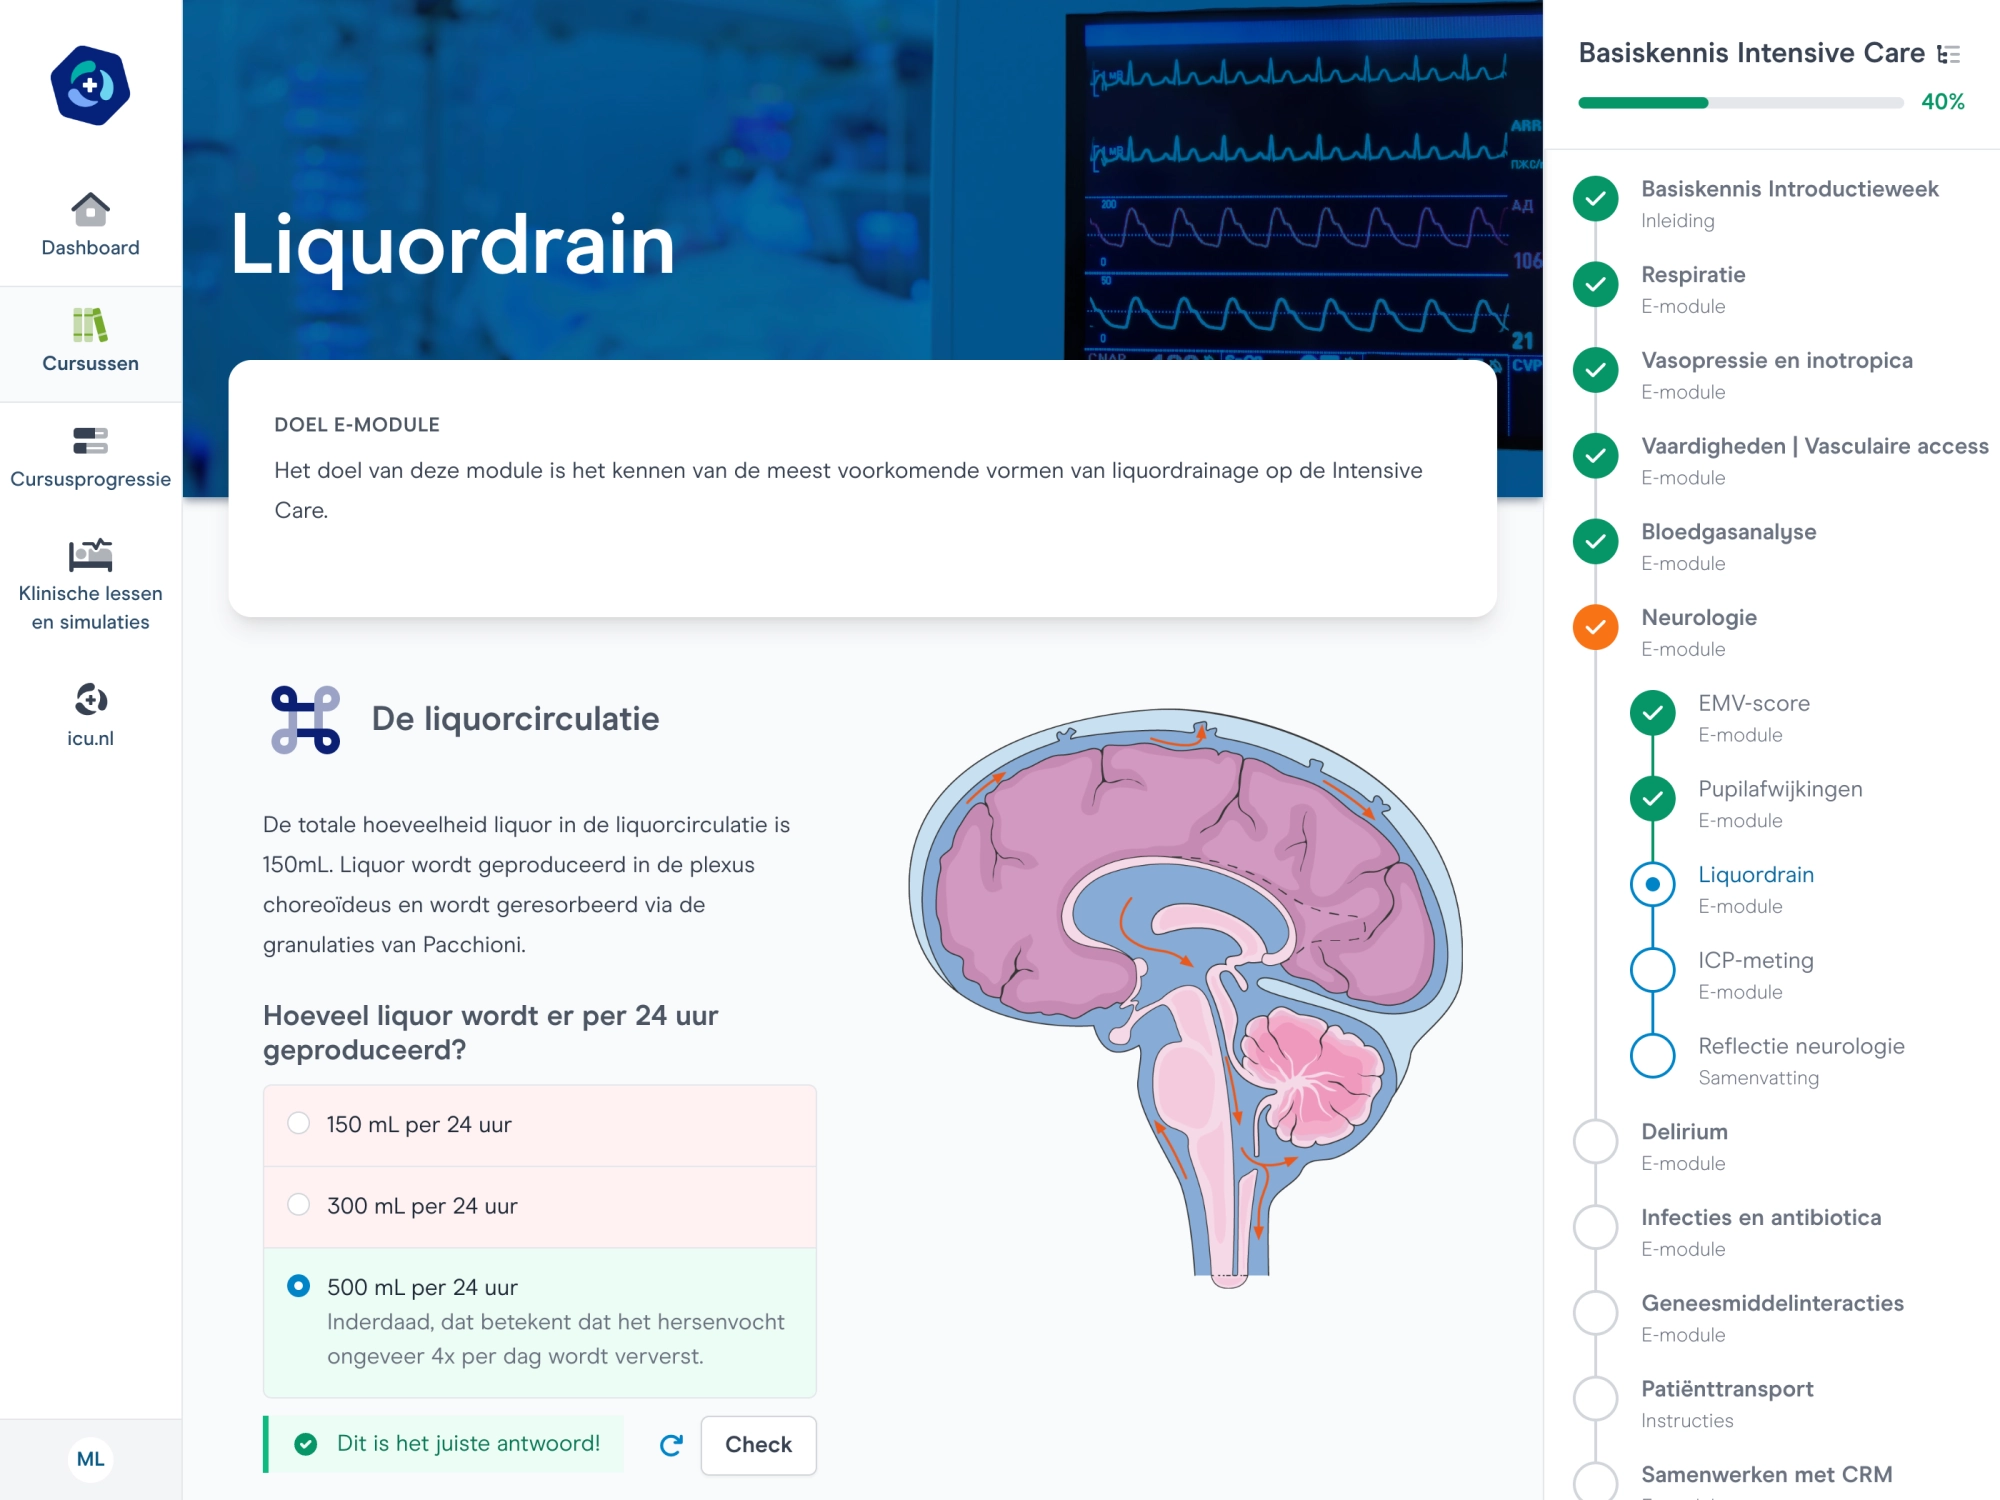 E-learning en cursus over liquor, sedatie en neurologie op de intensive care